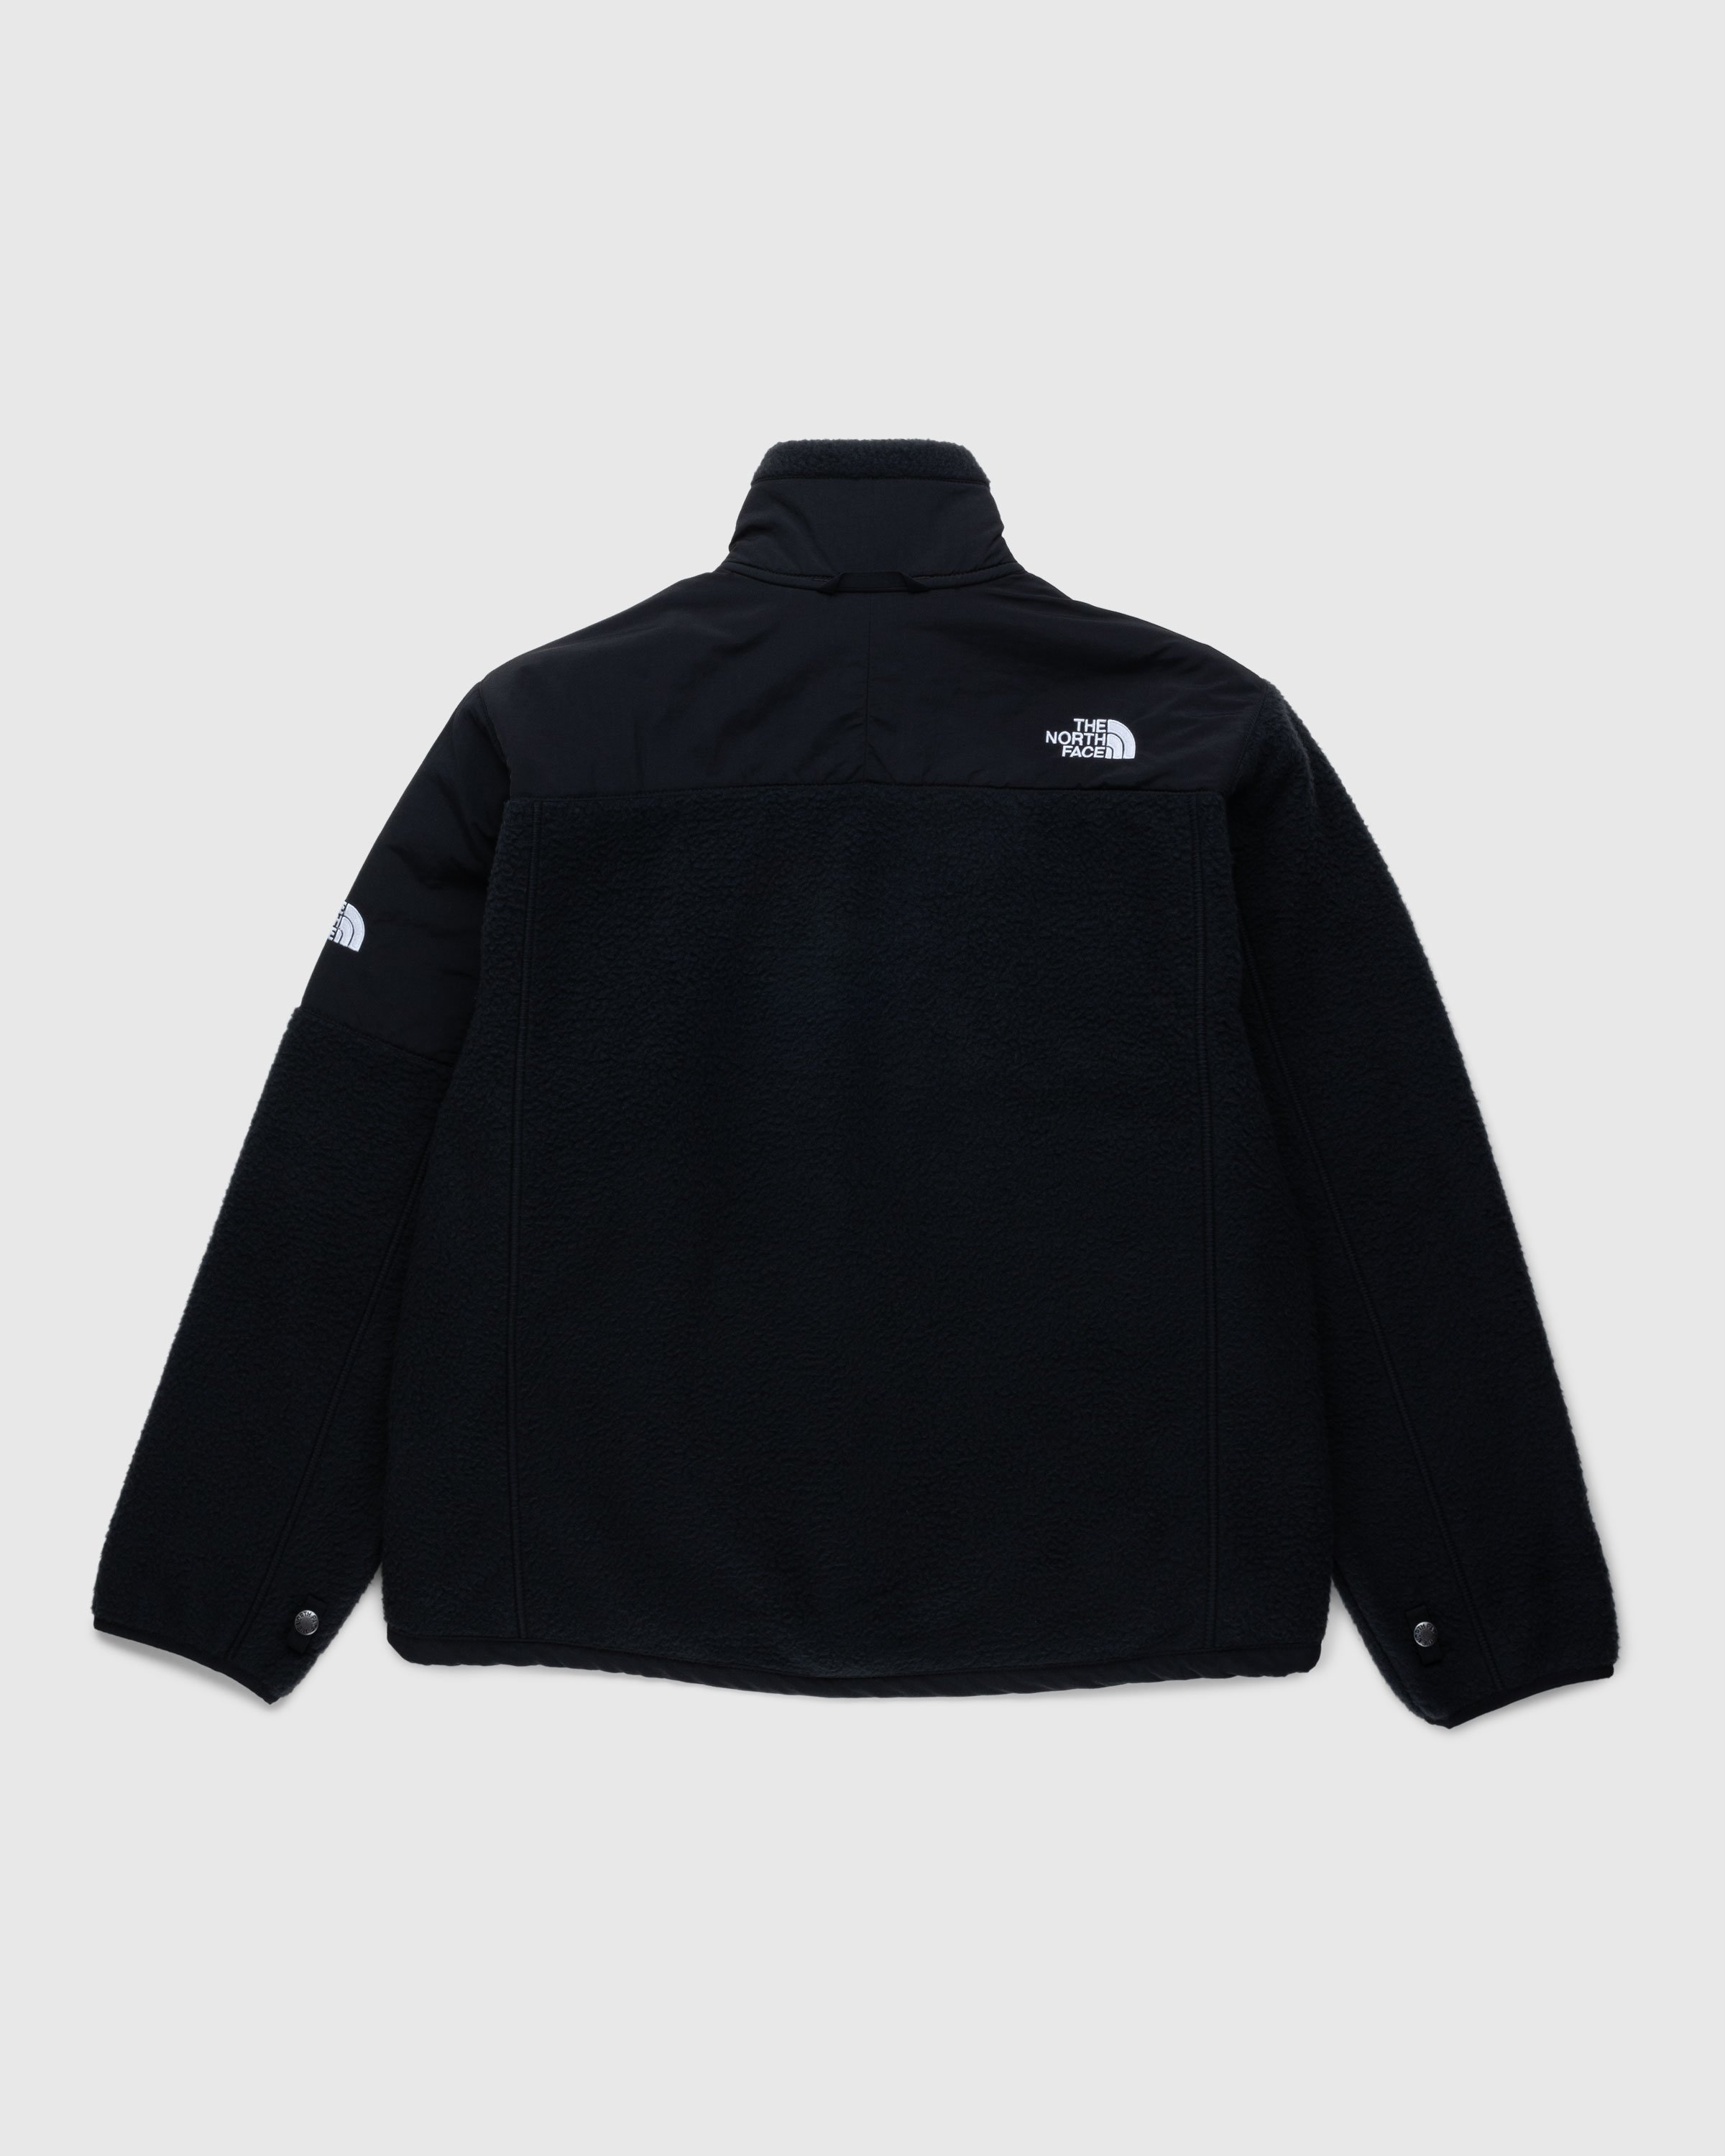 The North Face - '94 High Pile Denali Jacket Black - Clothing - Black - Image 2